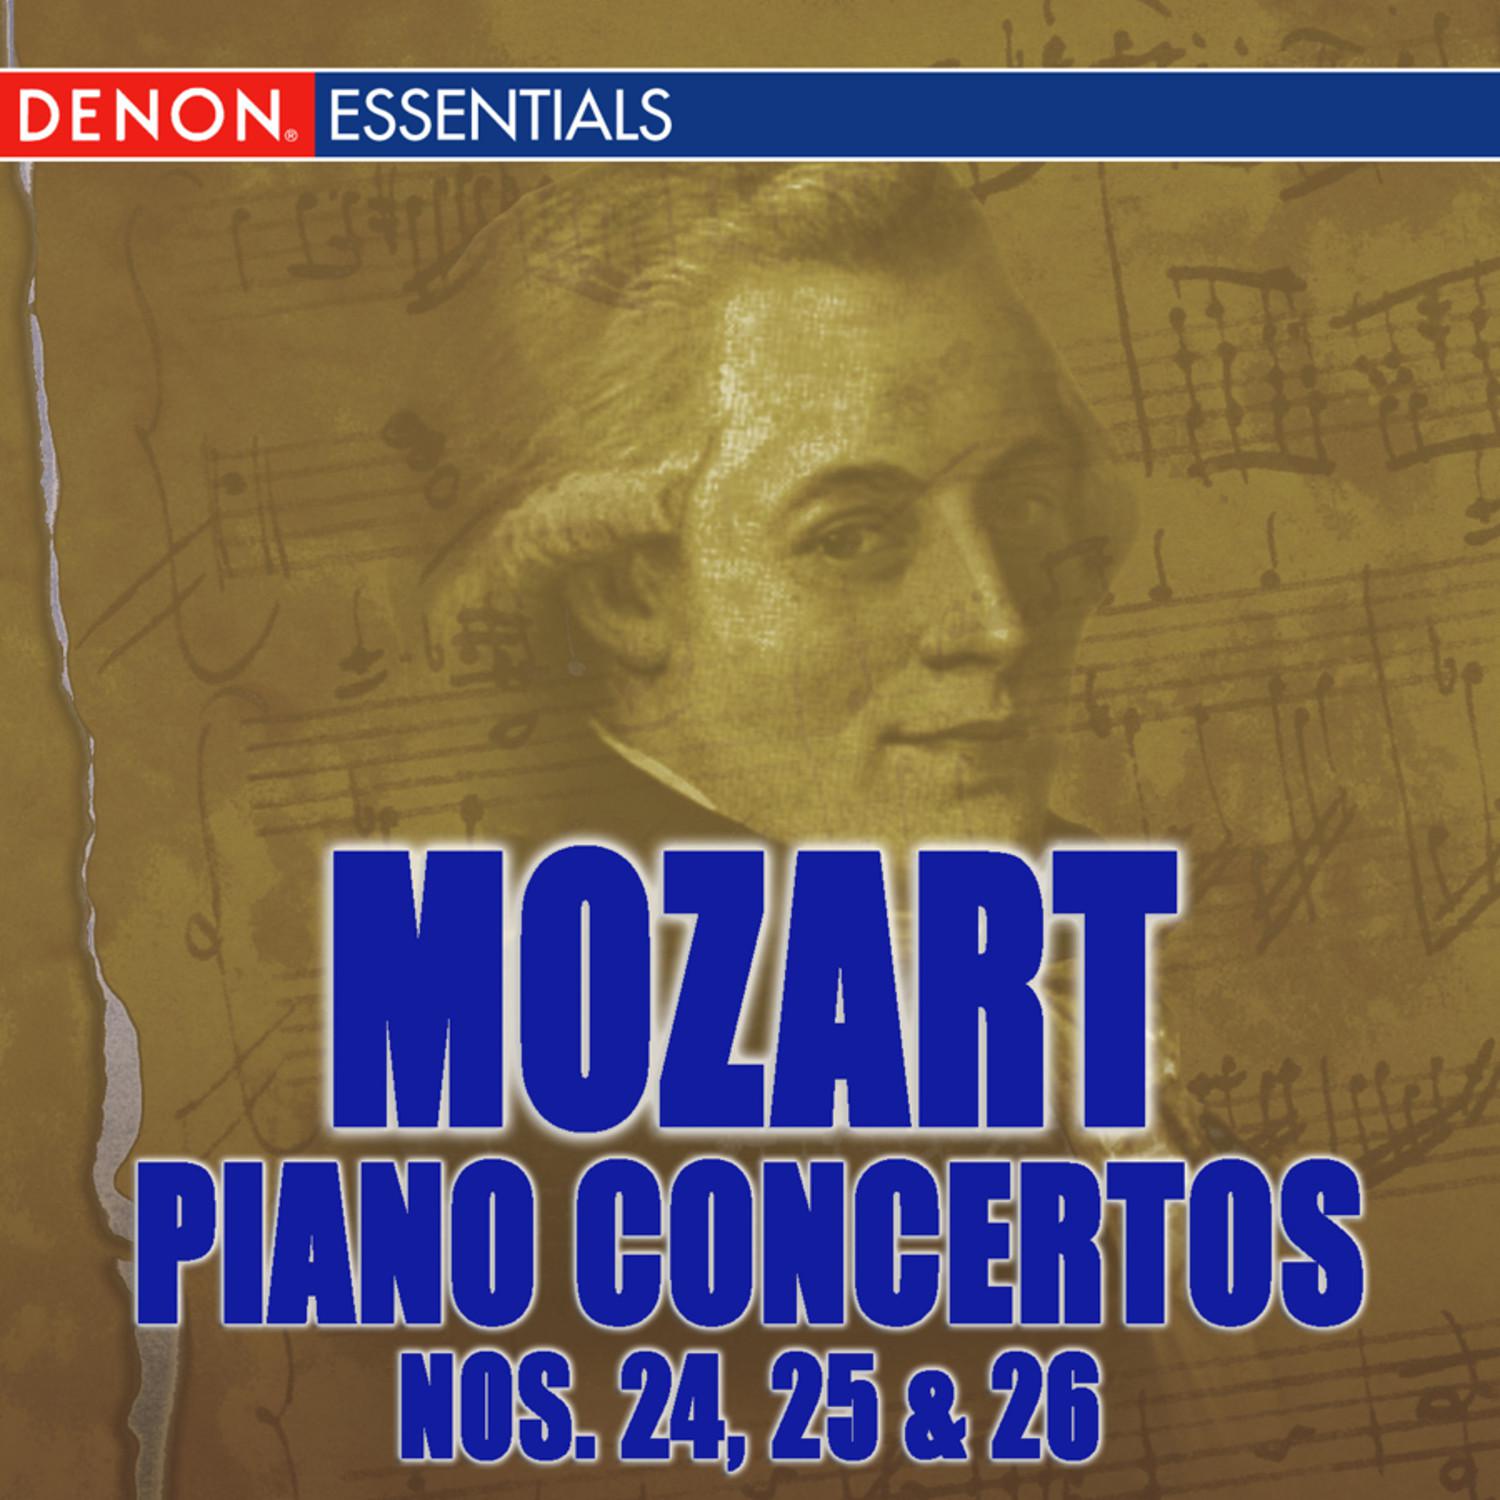 Piano Concerto No. 26 in D Major, K. 537: I. Allegro